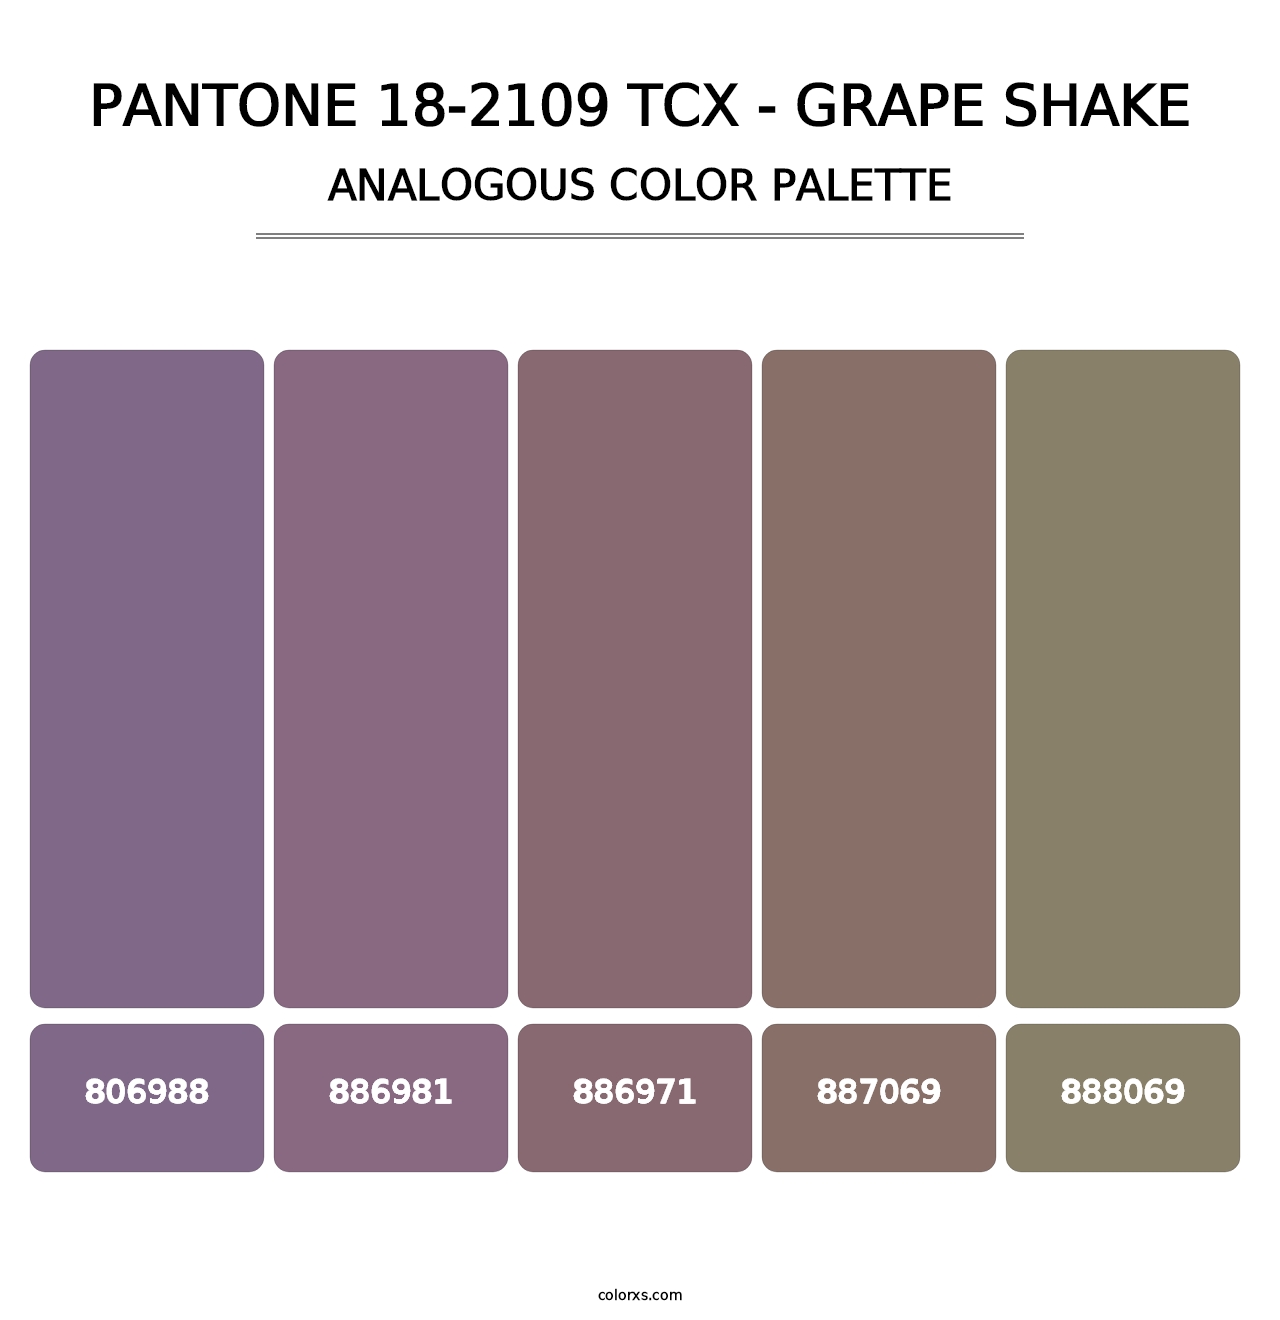 PANTONE 18-2109 TCX - Grape Shake - Analogous Color Palette